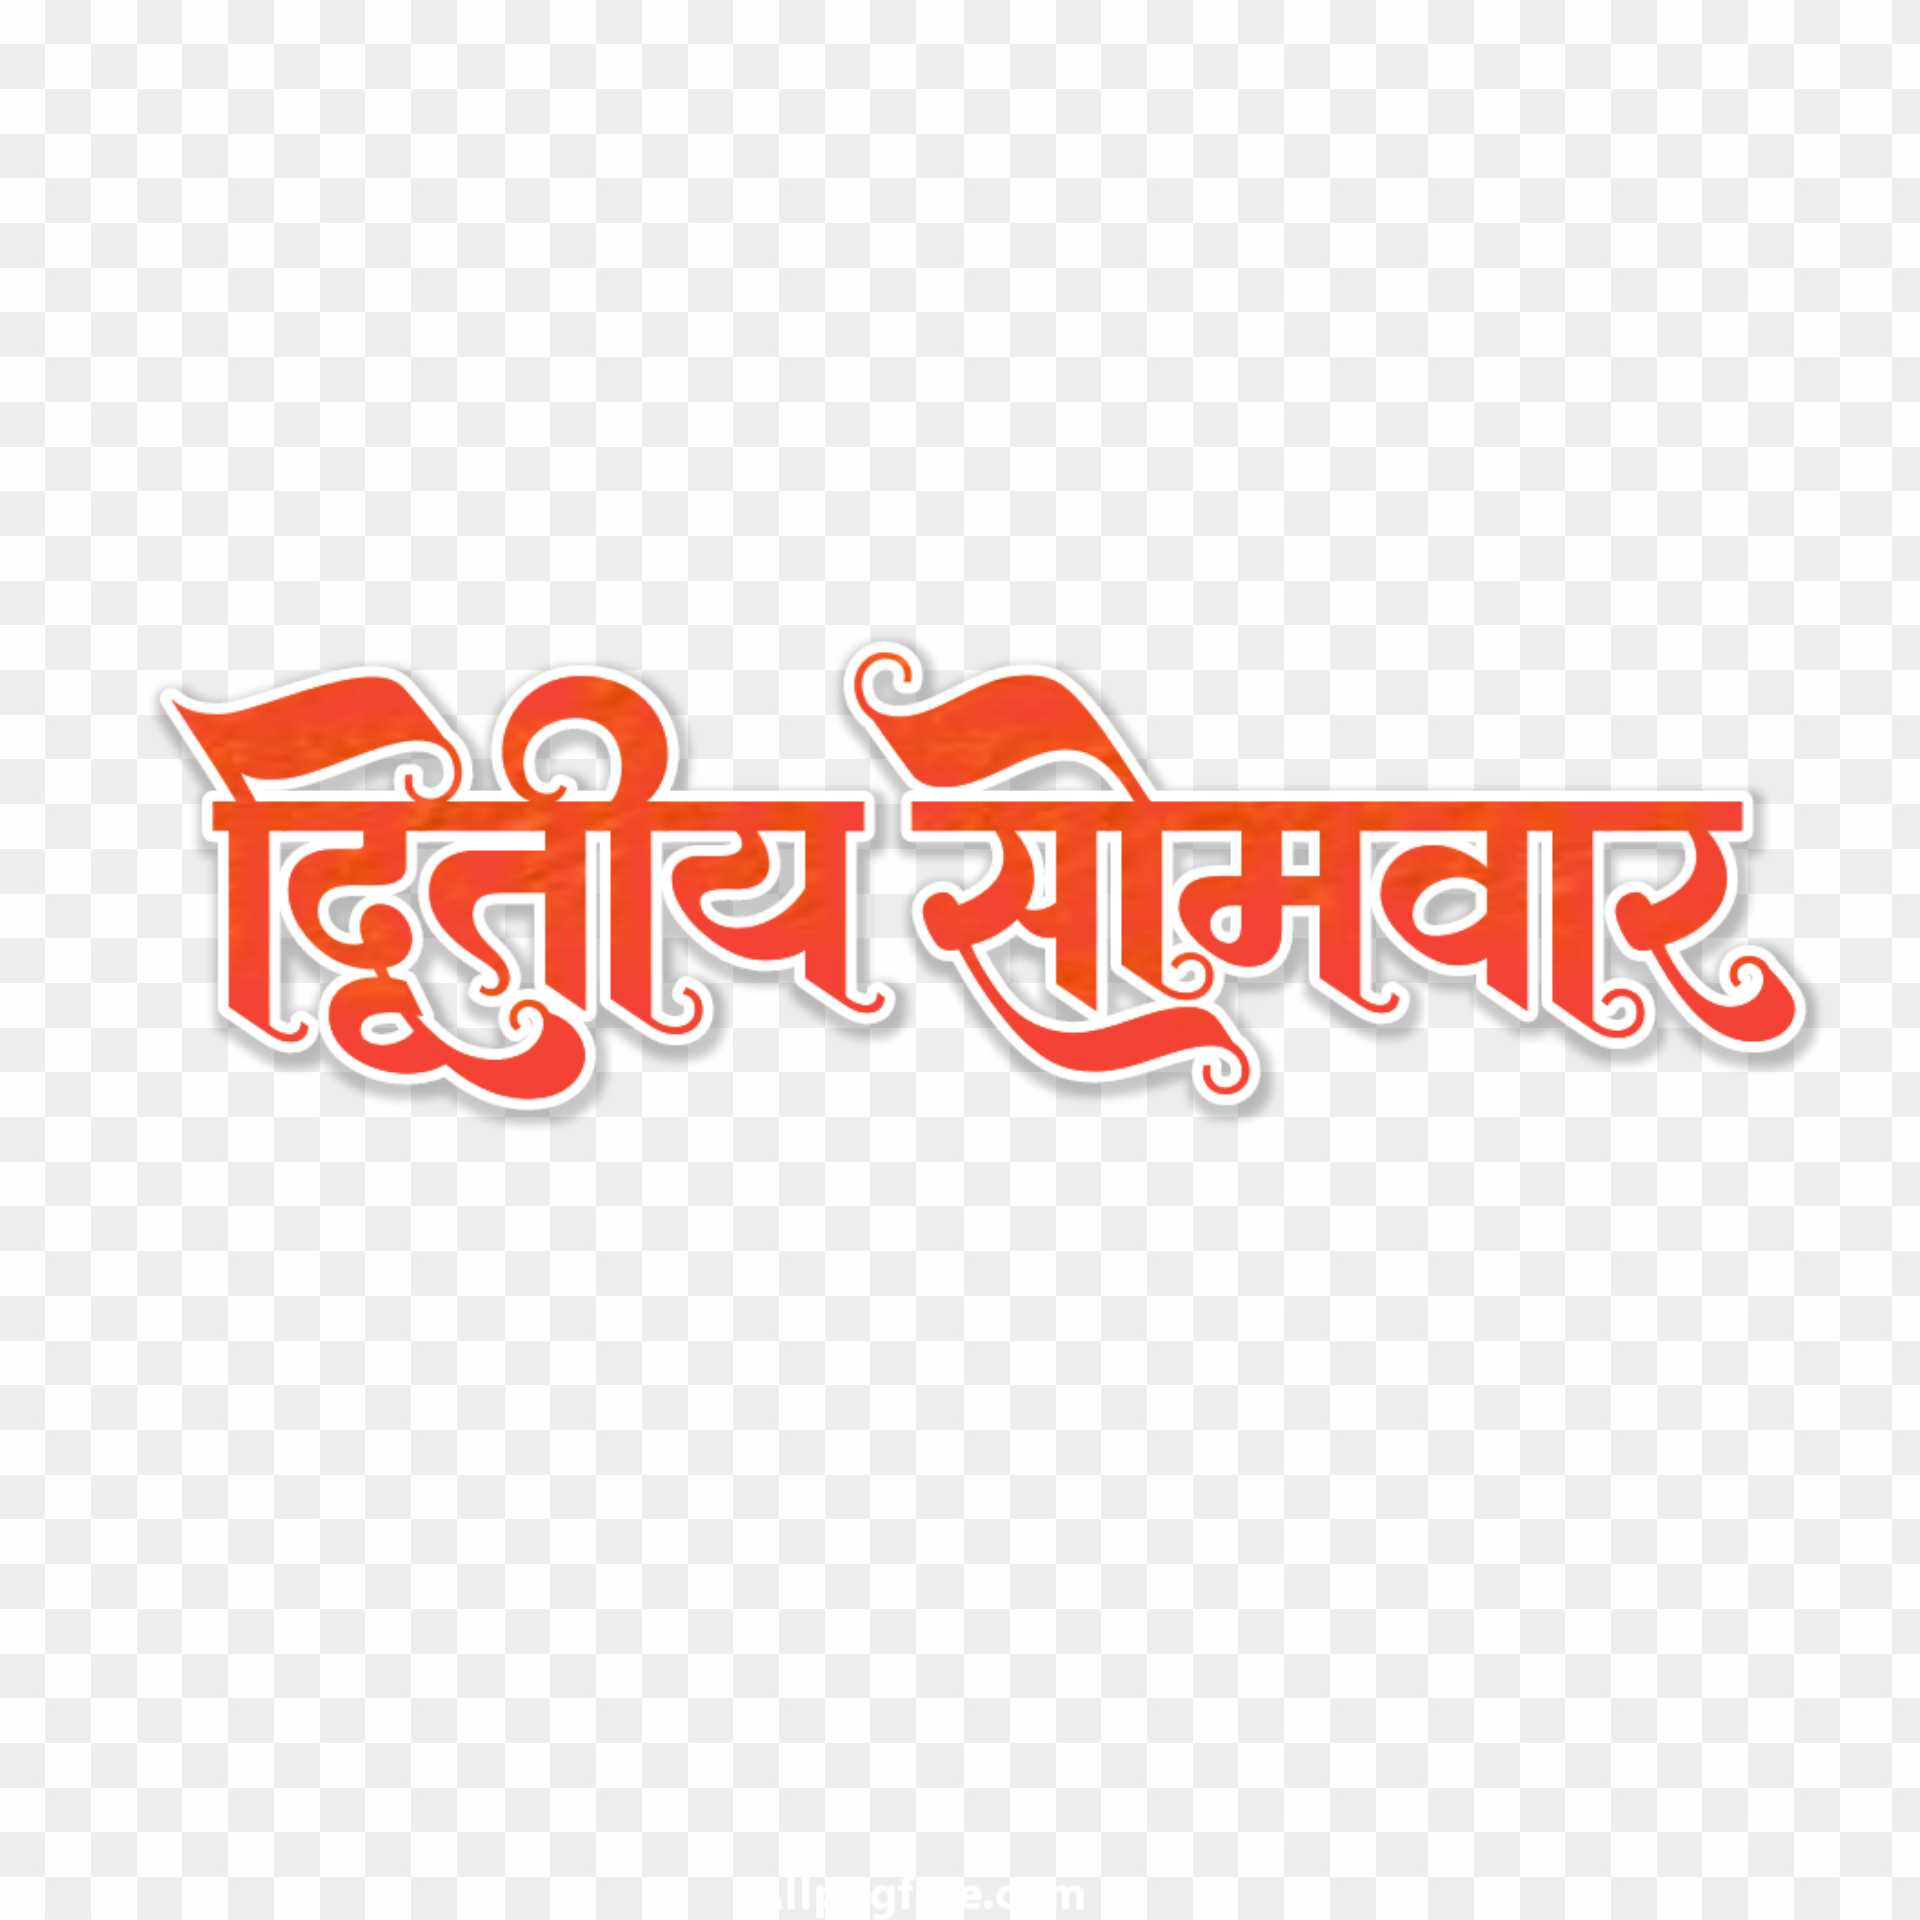 Shravan Mas Second Somwar Hindi text PNG images download 